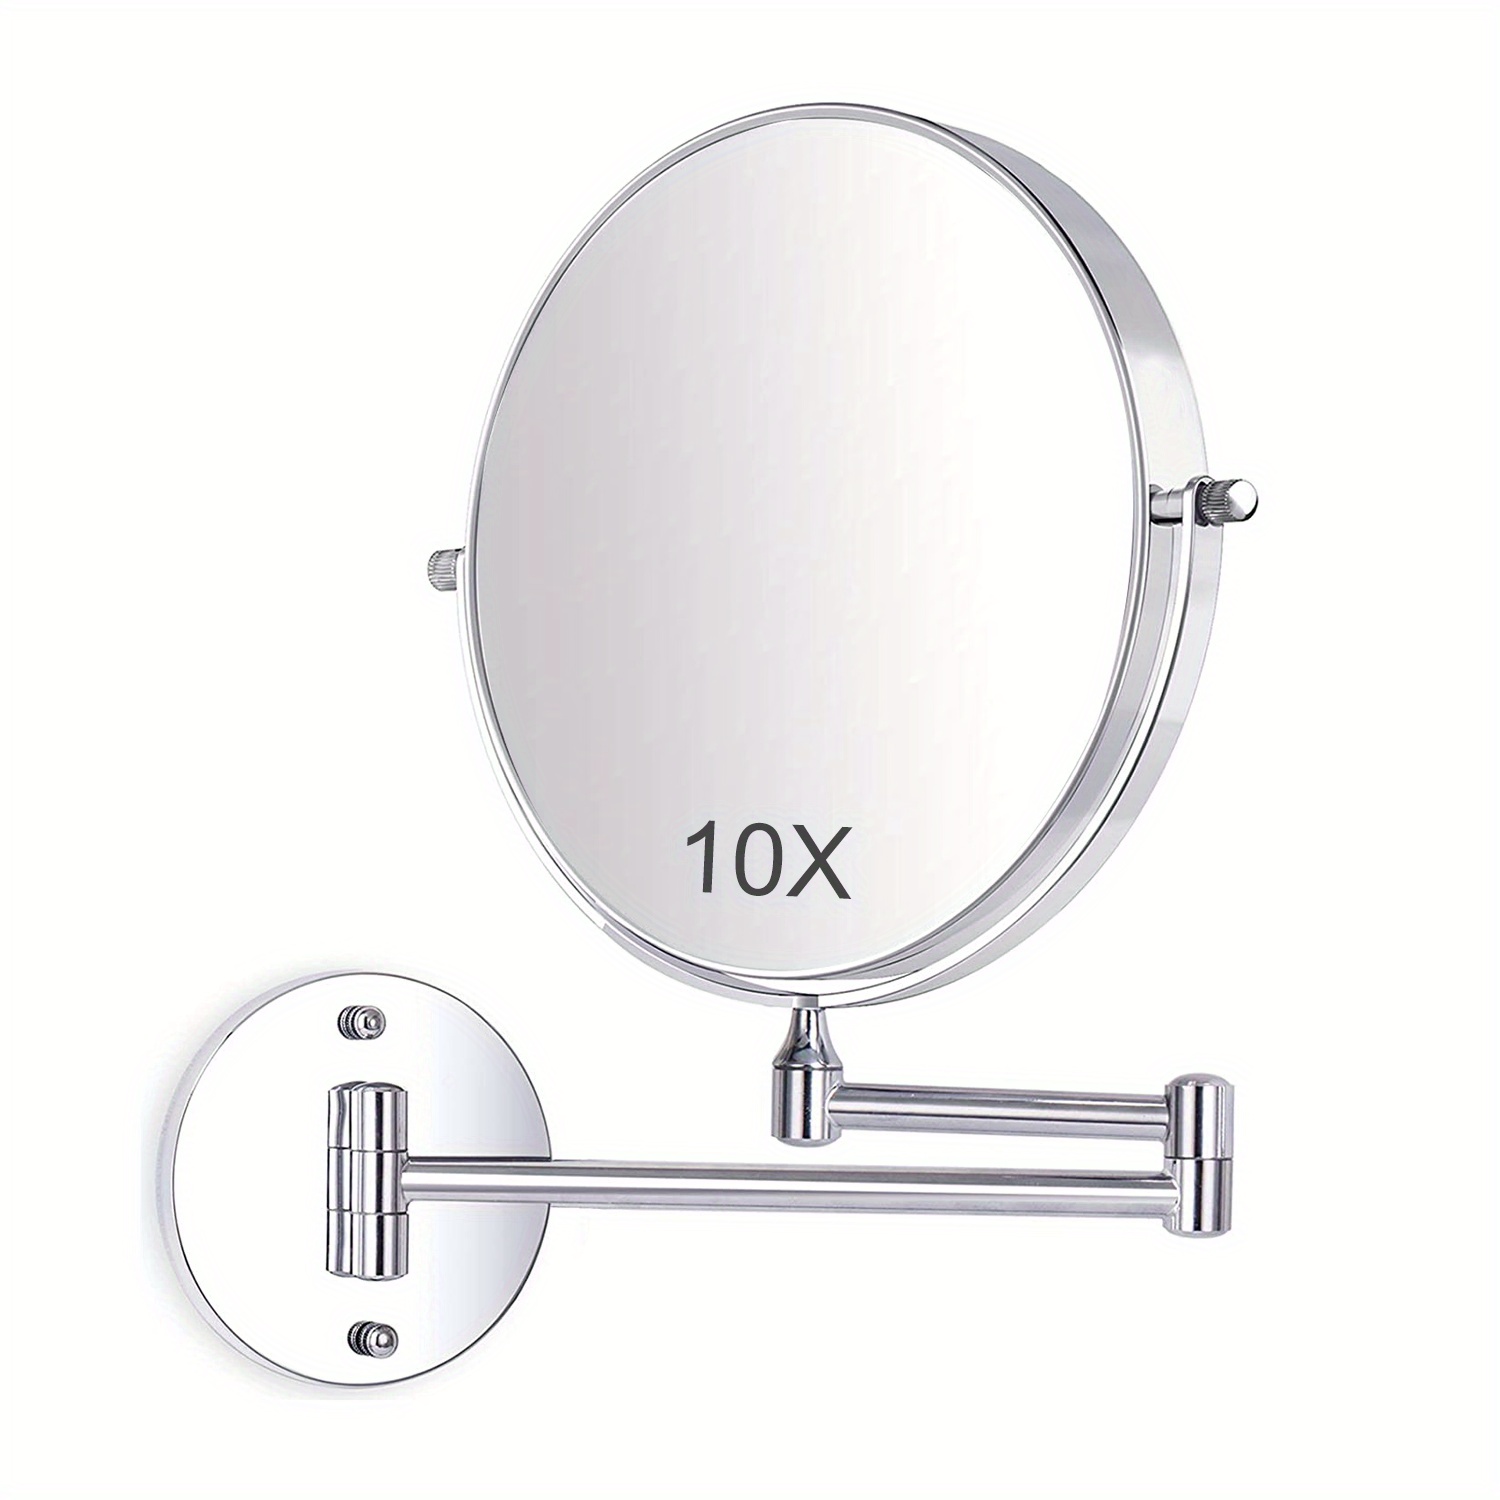  Espejo compacto de aumento para monederos, aumento 1x/10x,  espejo de maquillaje de viaje de doble cara, espejo de bolsillo pequeño de  4 pulgadas o espejo de bolso. Espejos compactos portátiles 